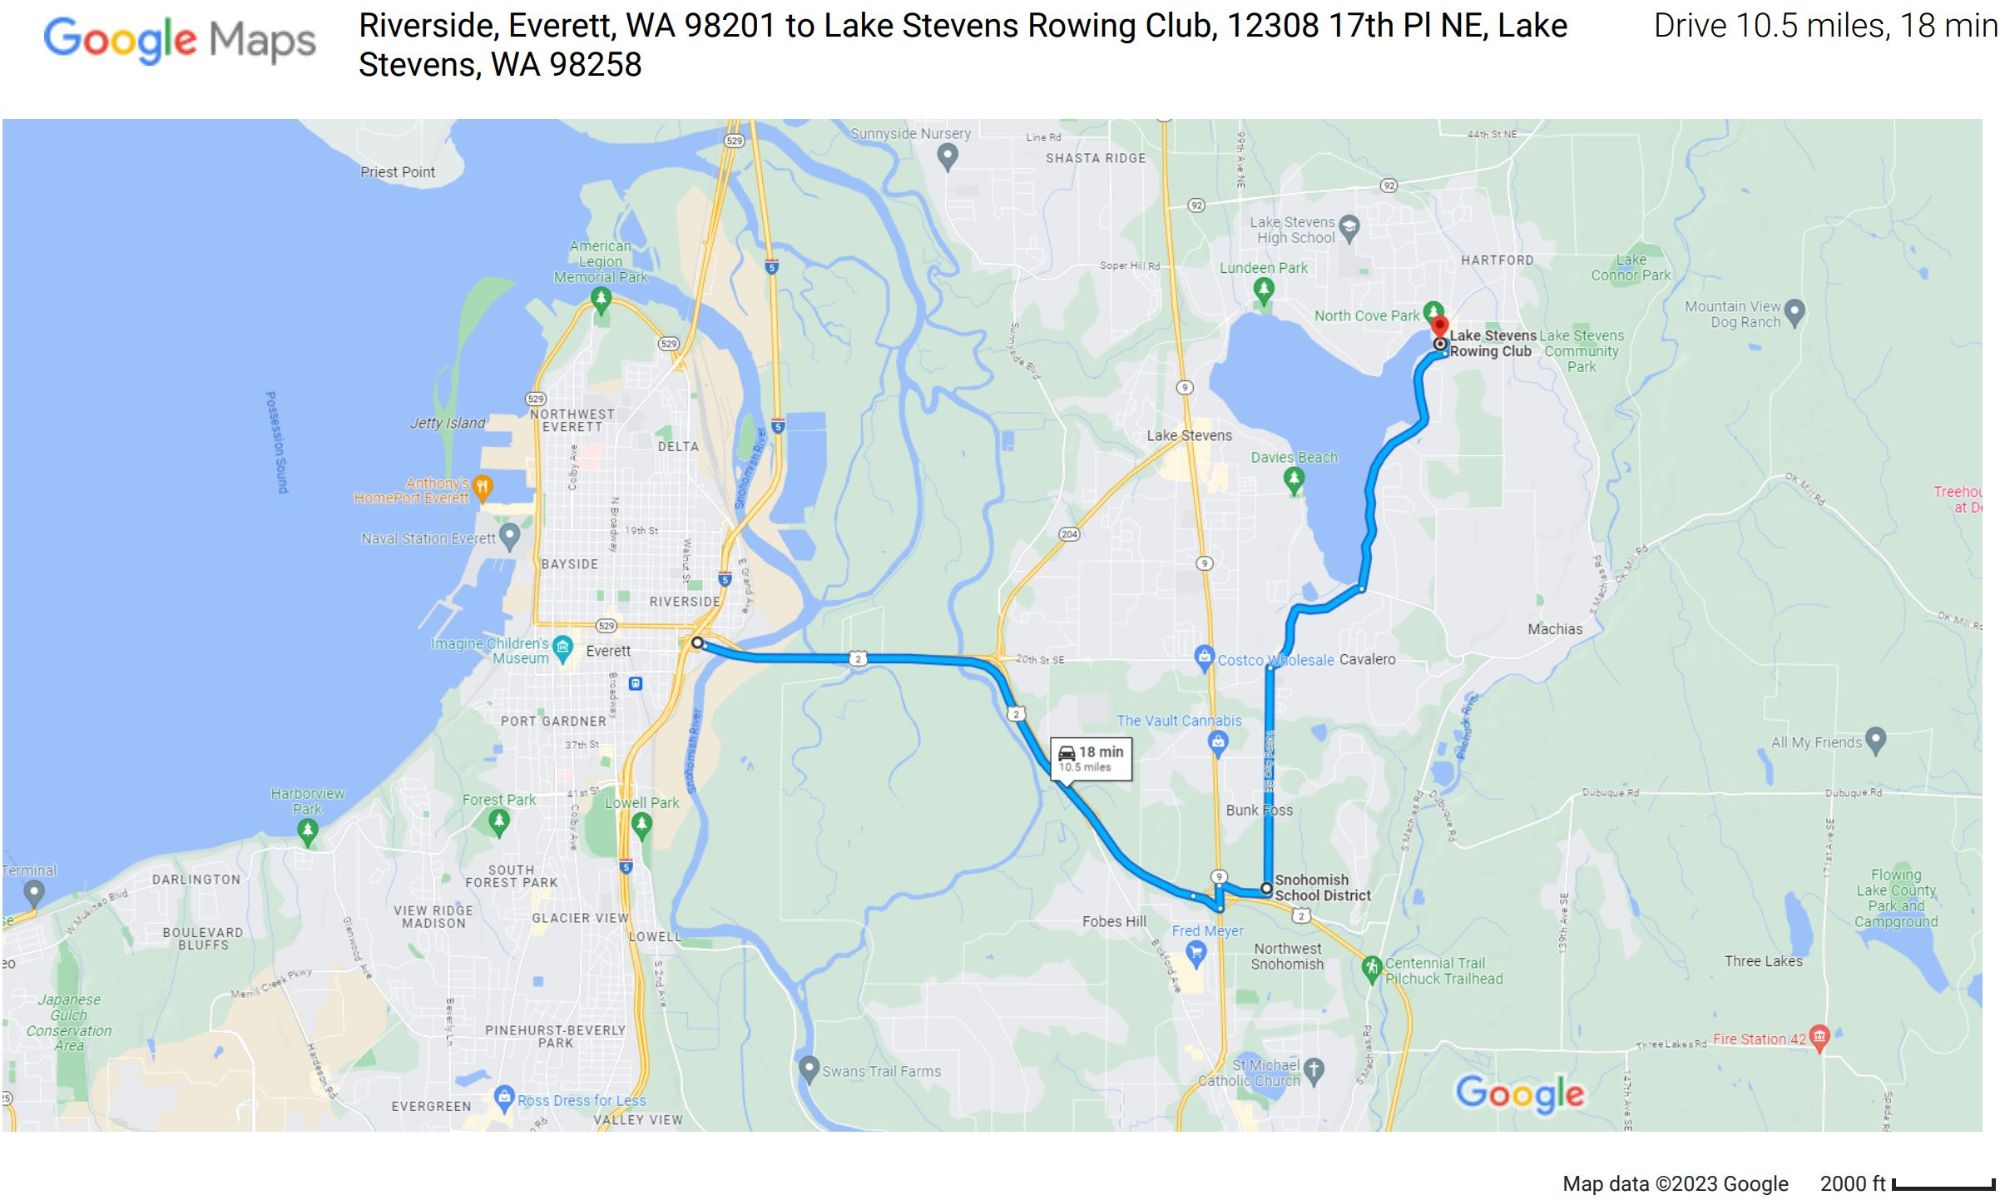 Google Directions Everett to LSRC